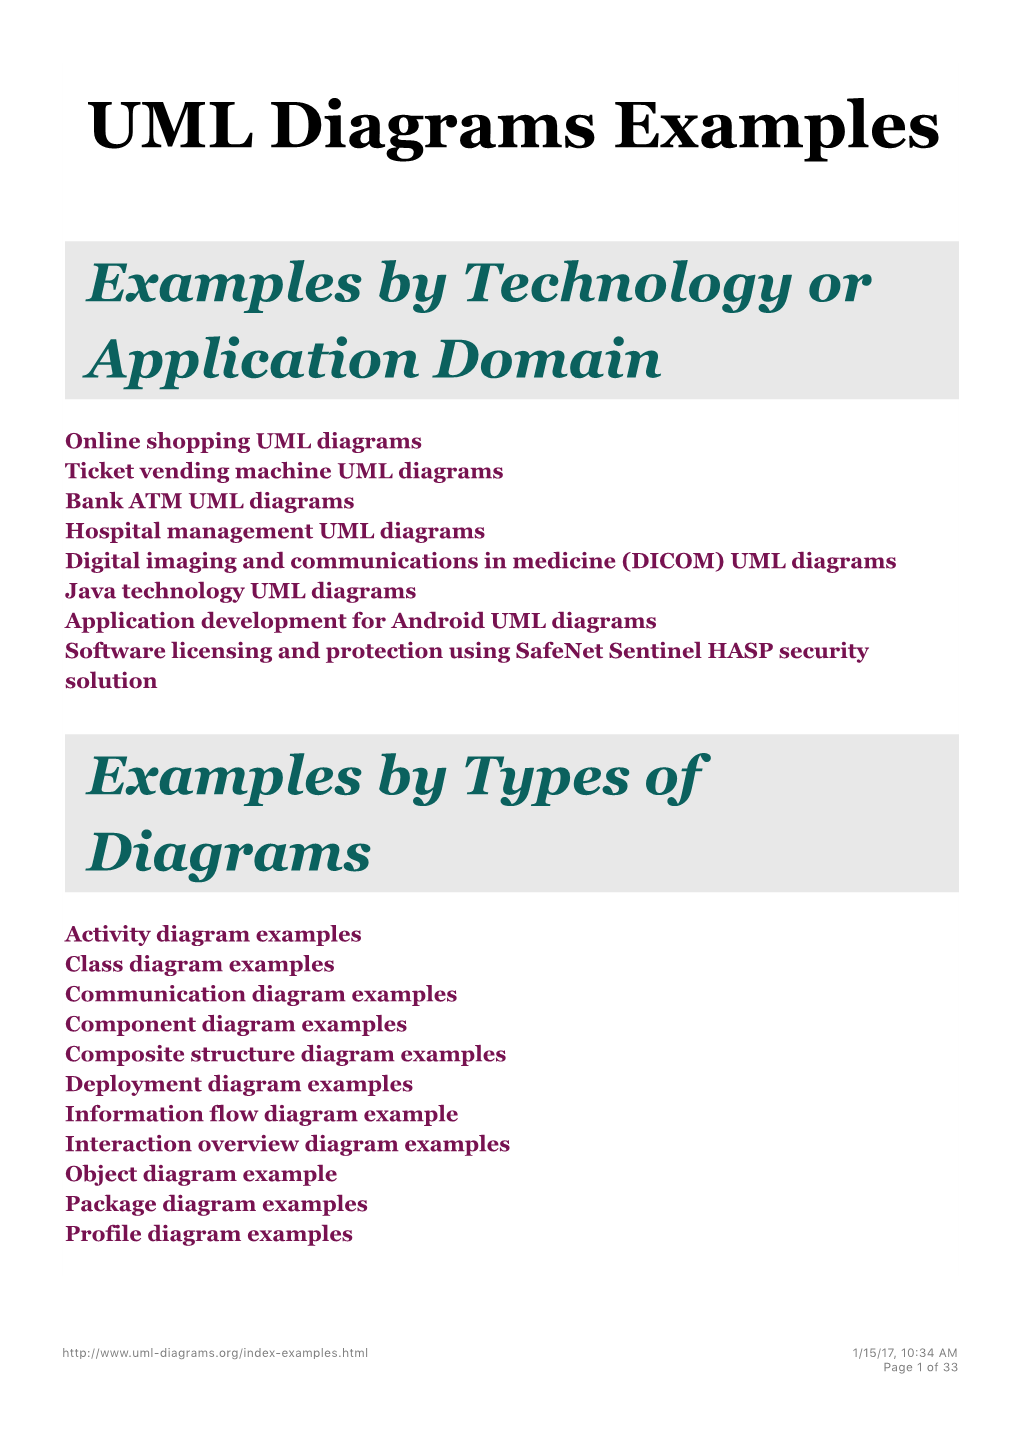 Examples of UML Diagrams